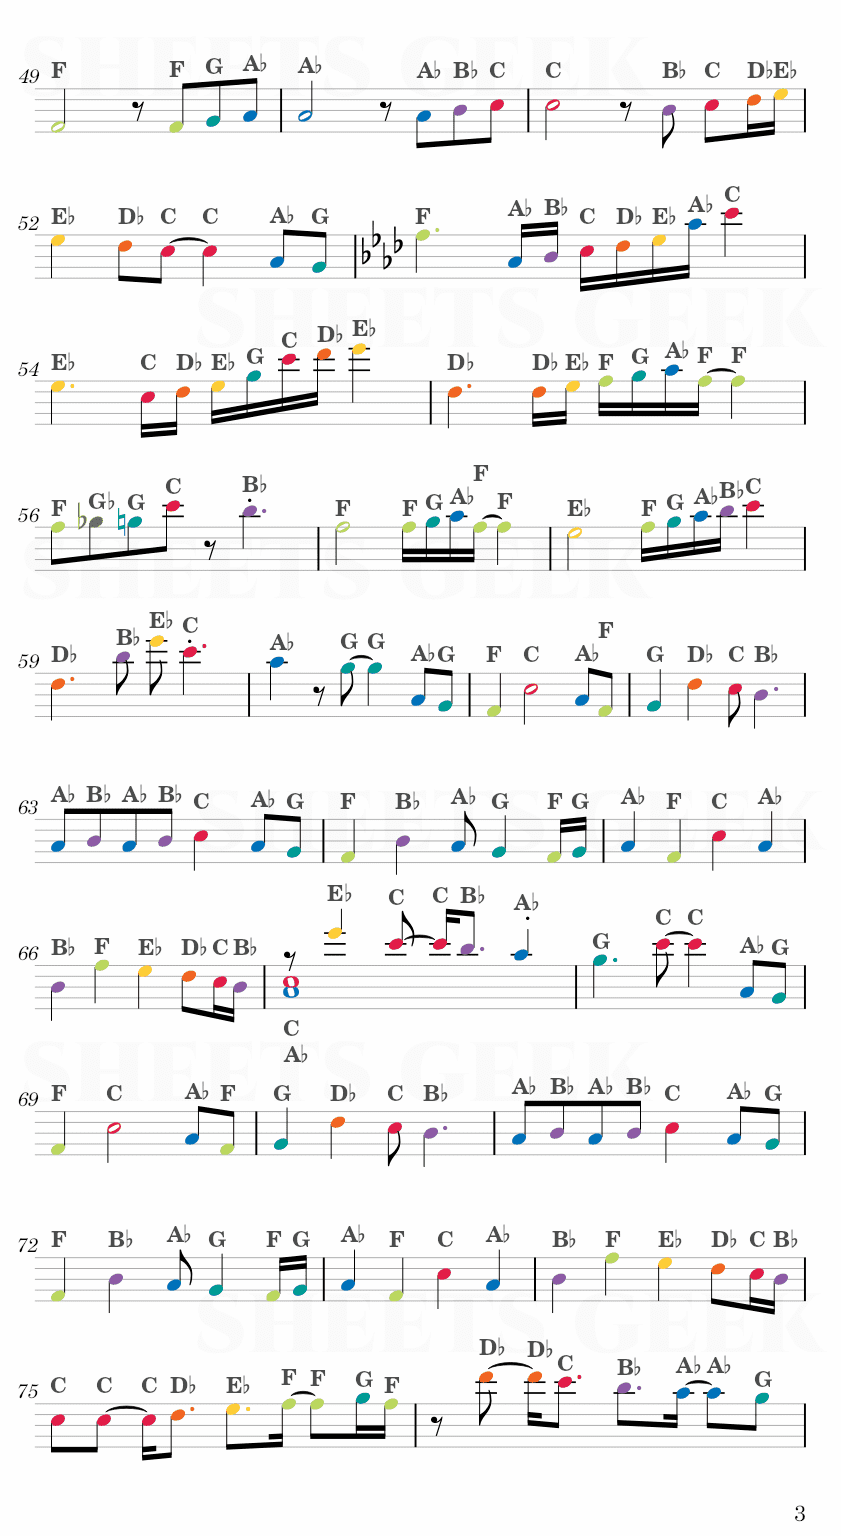 Case Closed - Detective Conan Theme Easy Sheet Music Free for piano, keyboard, flute, violin, sax, cello page 3